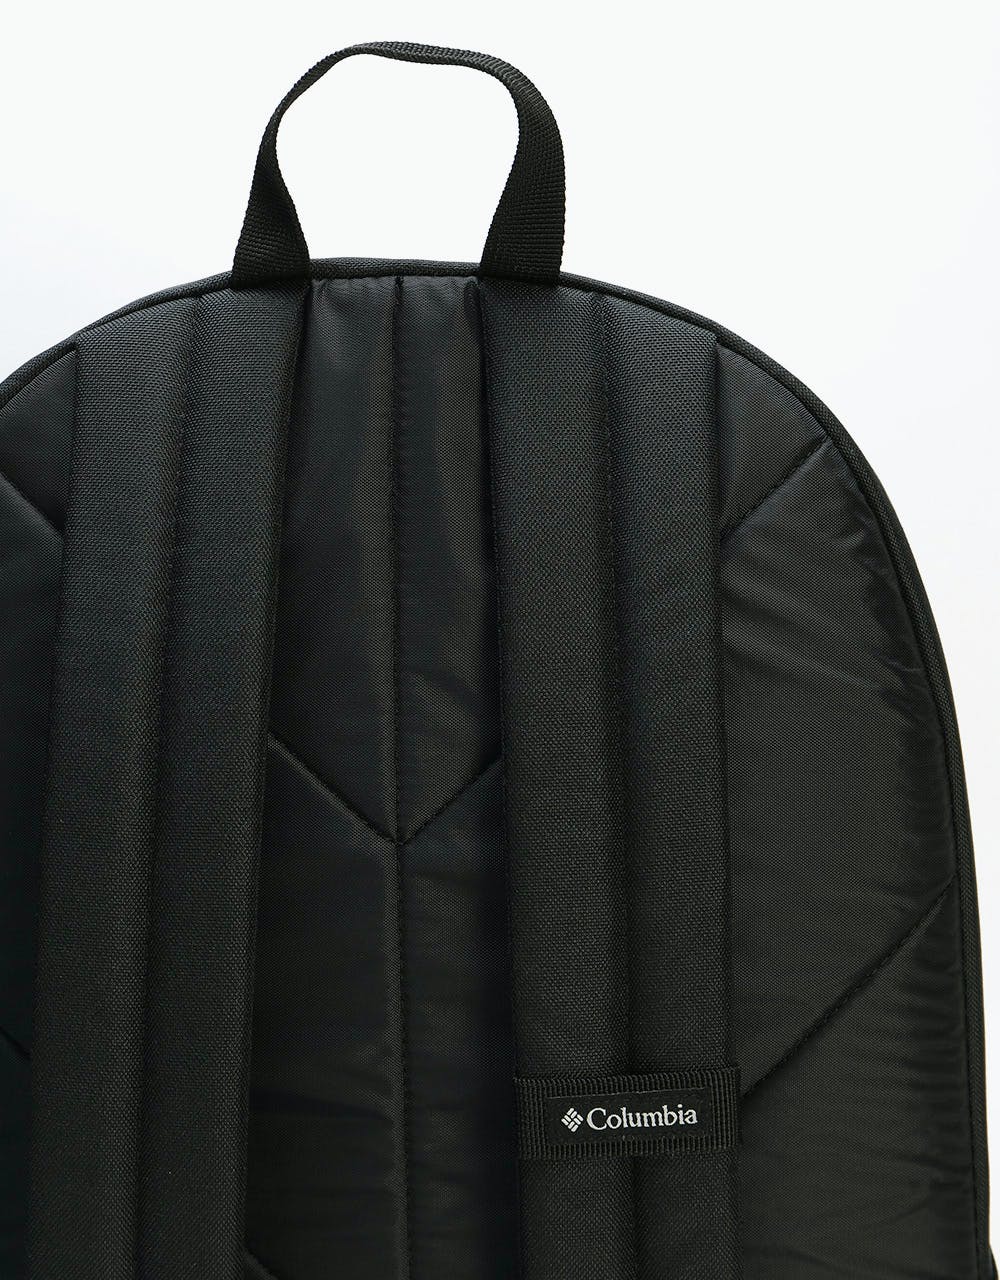 Columbia Zigzag 22L Backpack - Black